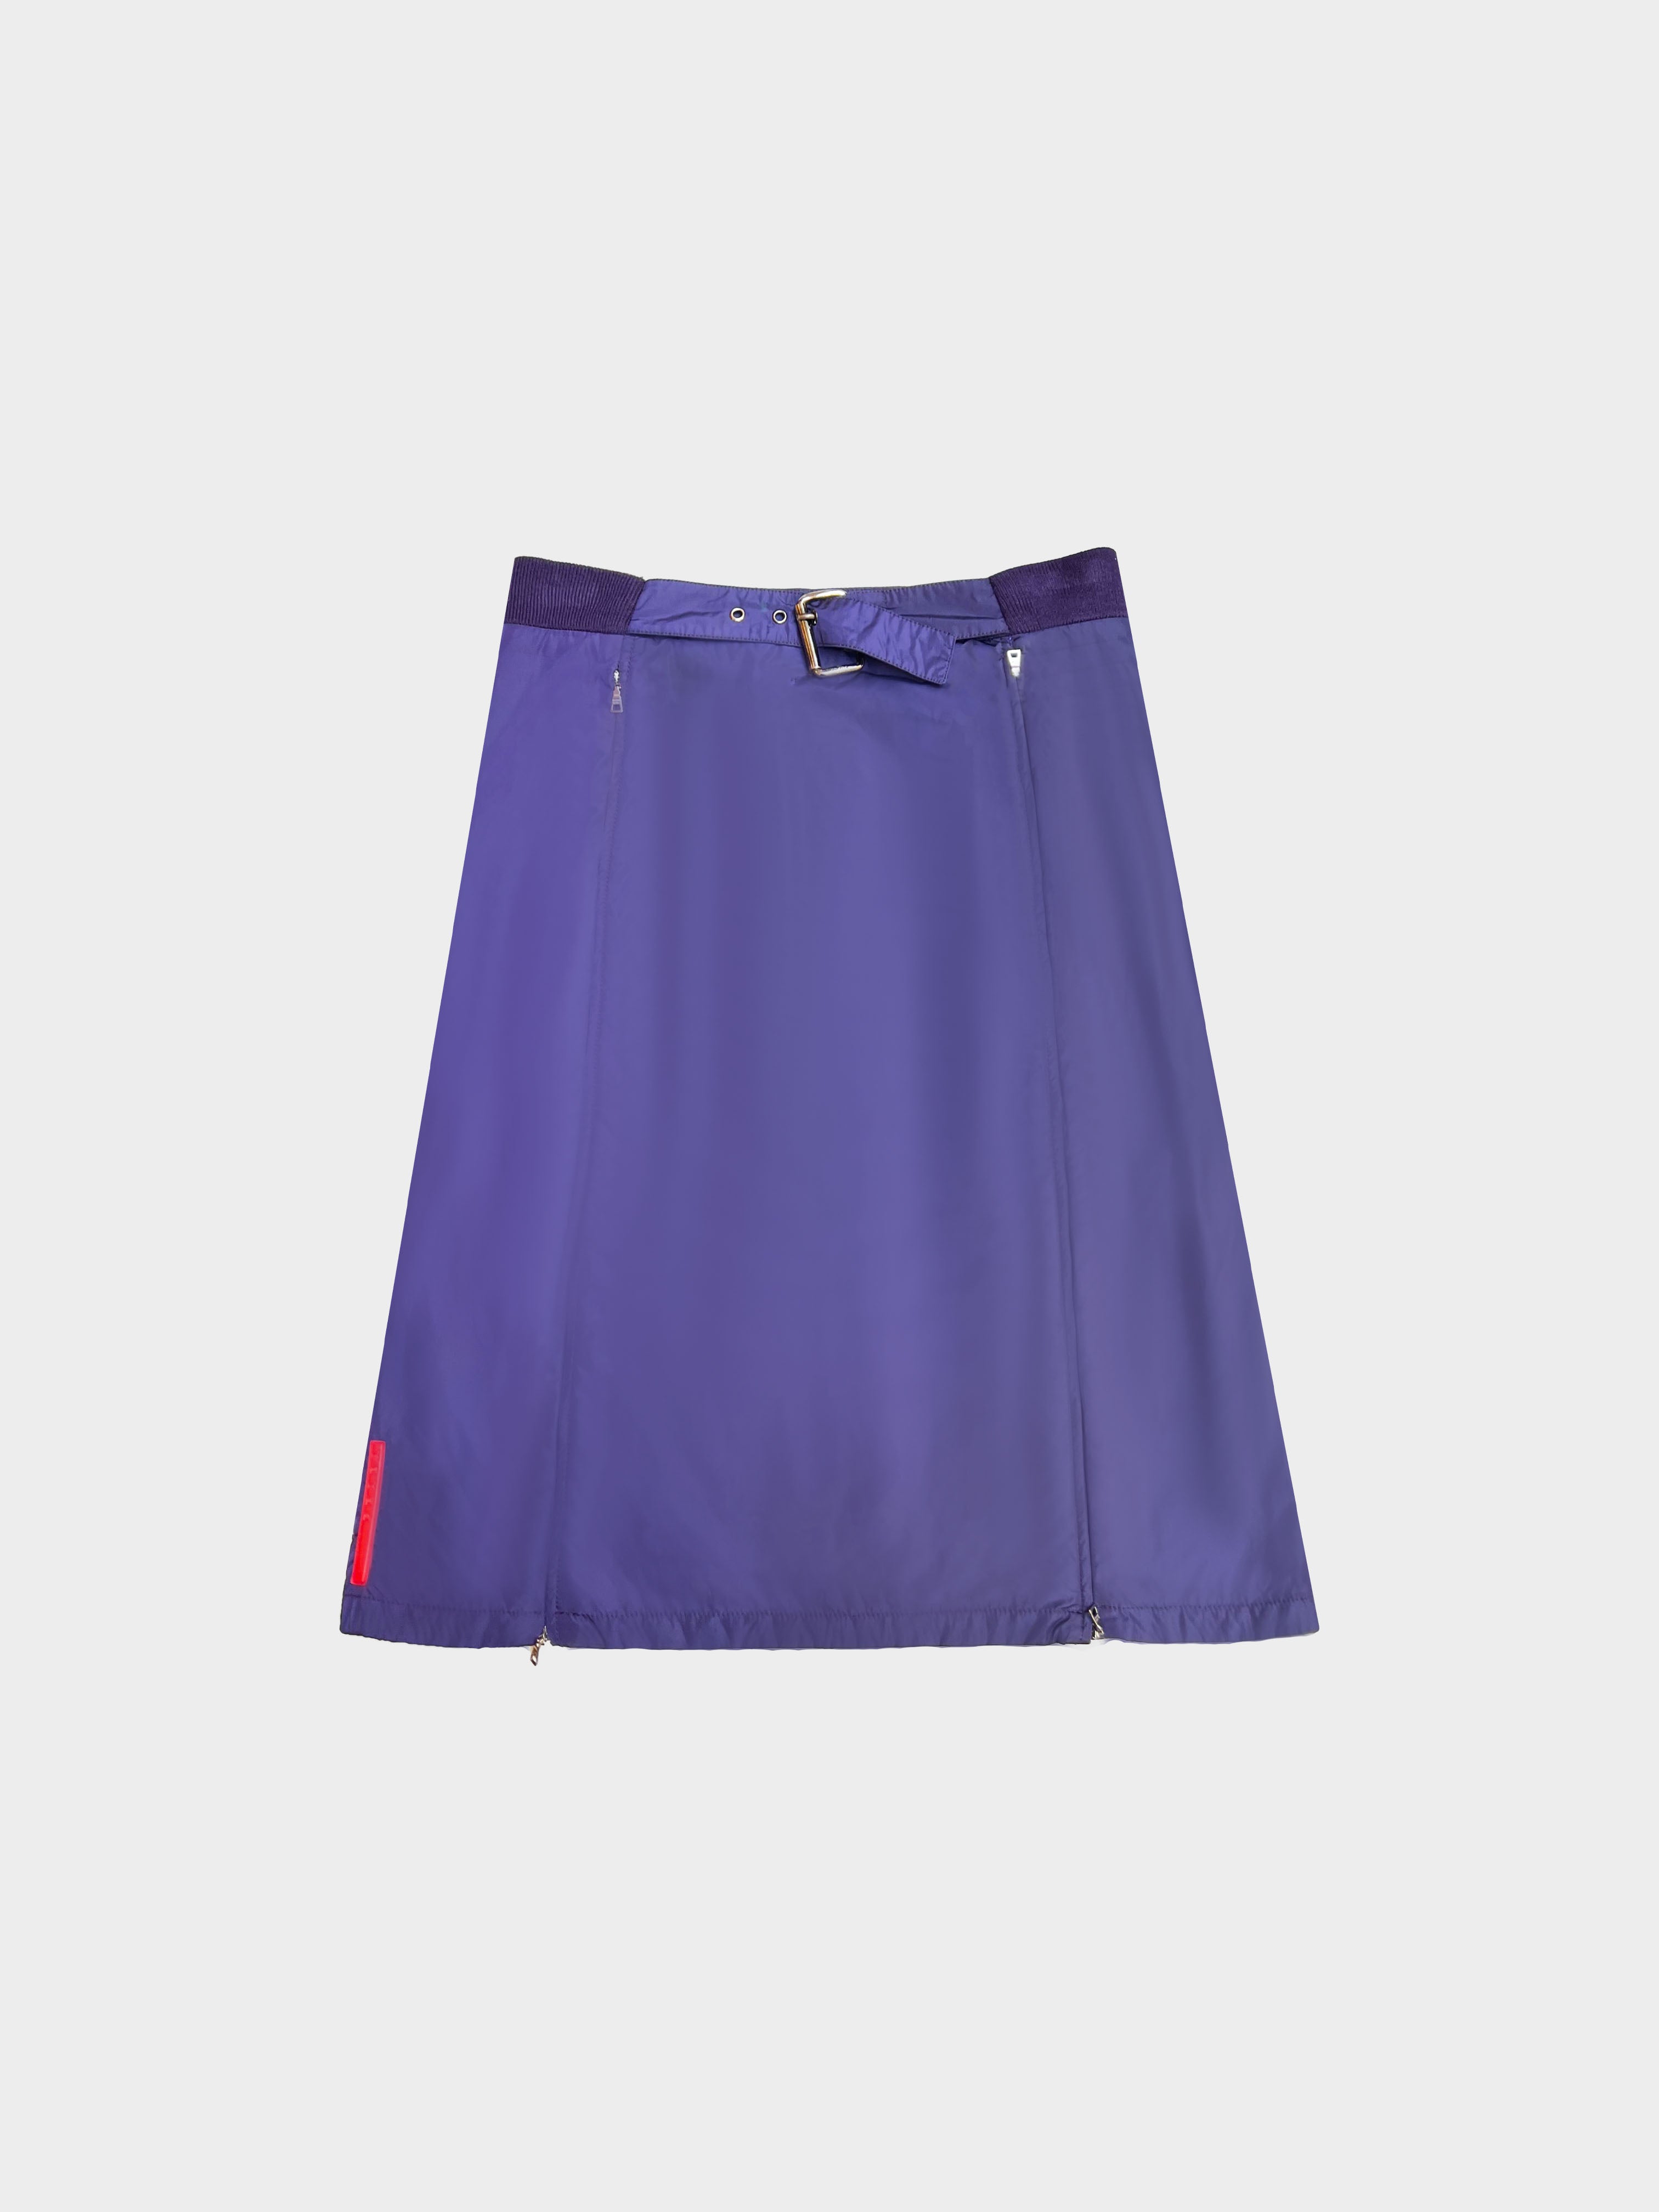 Prada 1999 Purple Nylon Zipper Skirt